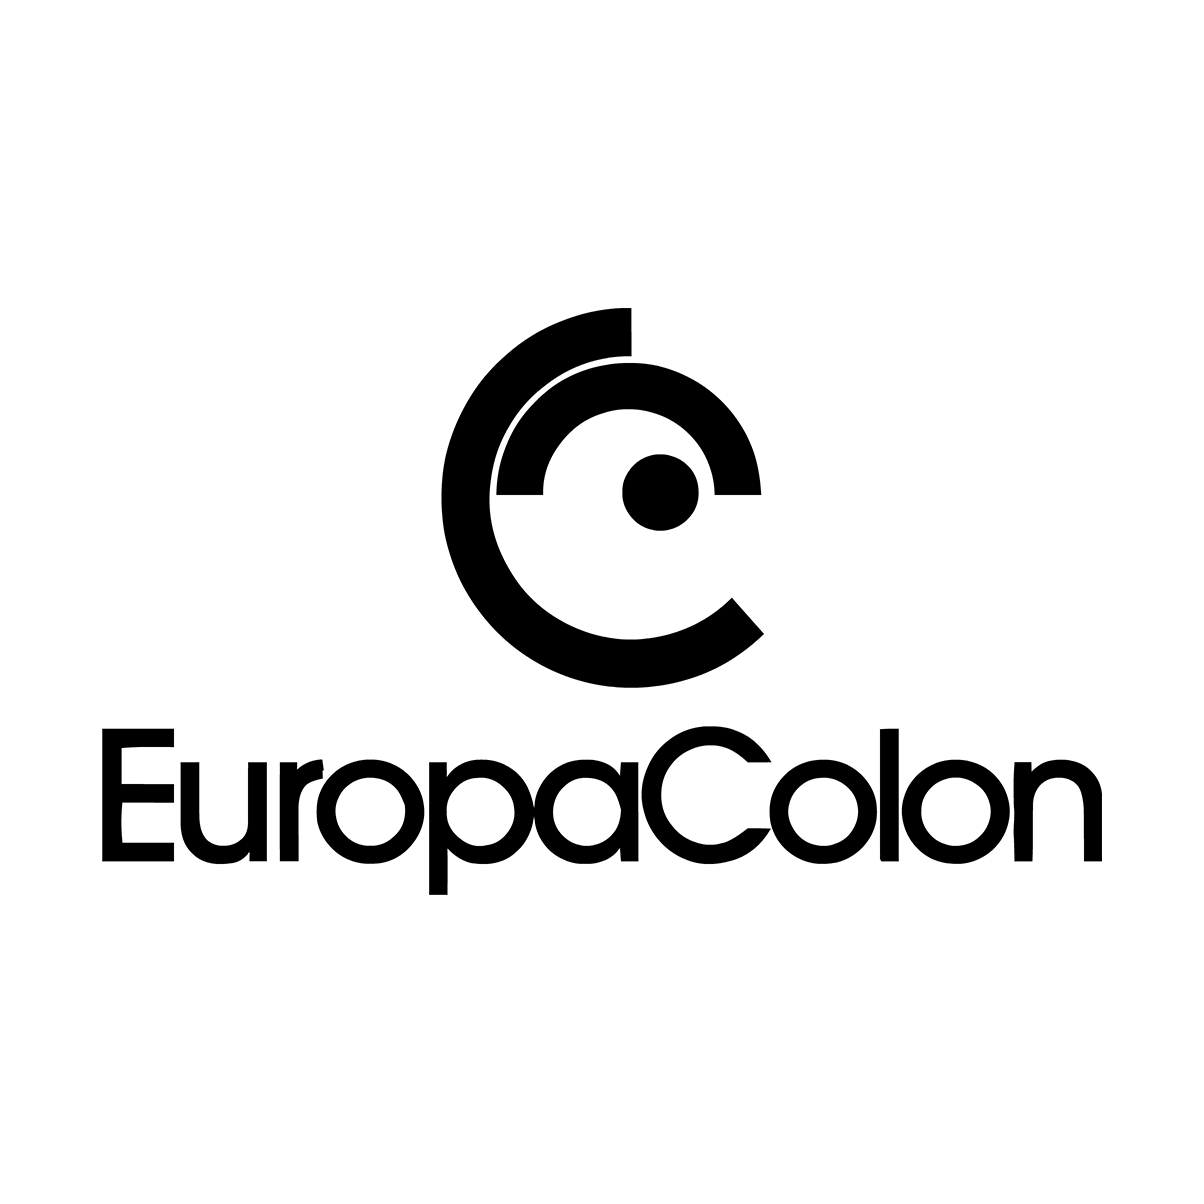 europacolon.png